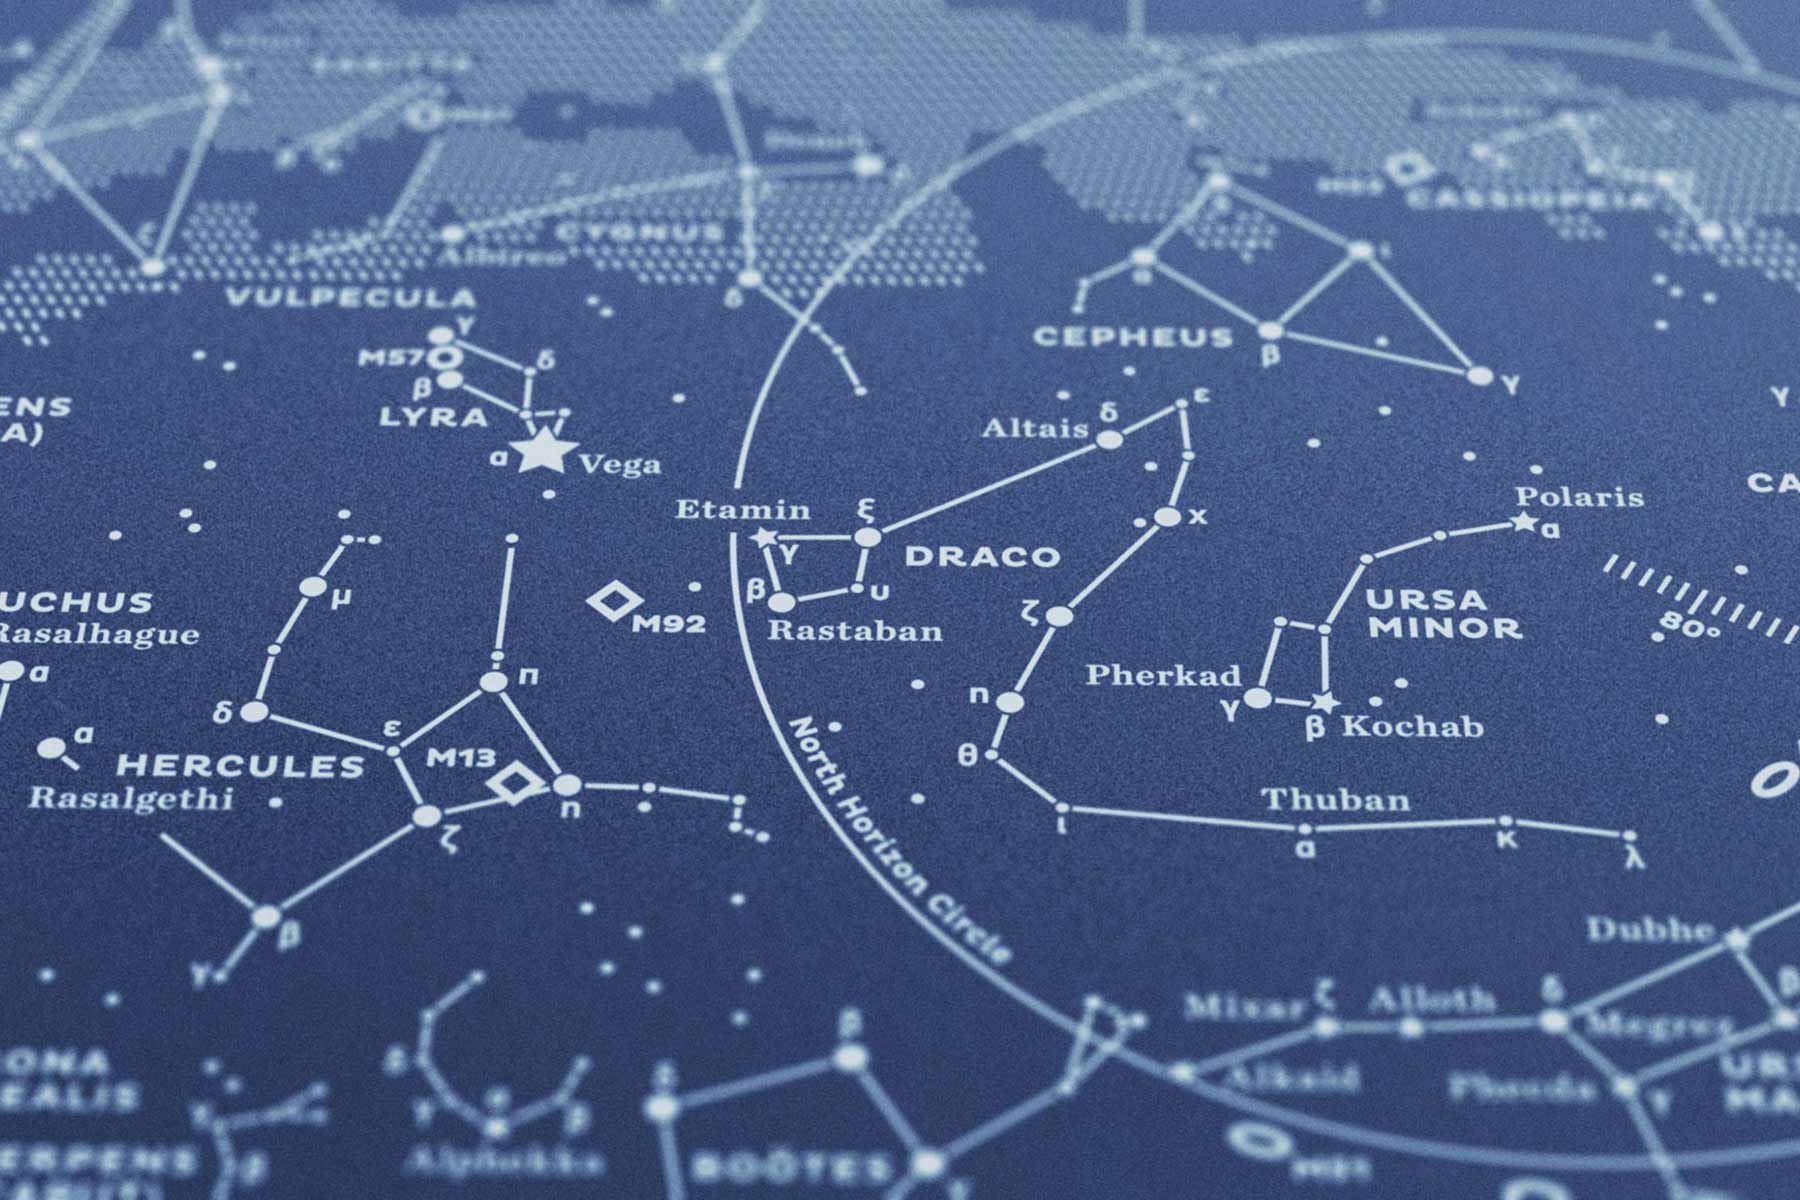 Stellar Map Constellation Prints: Map I — The Northern Sky (Night-Blue)